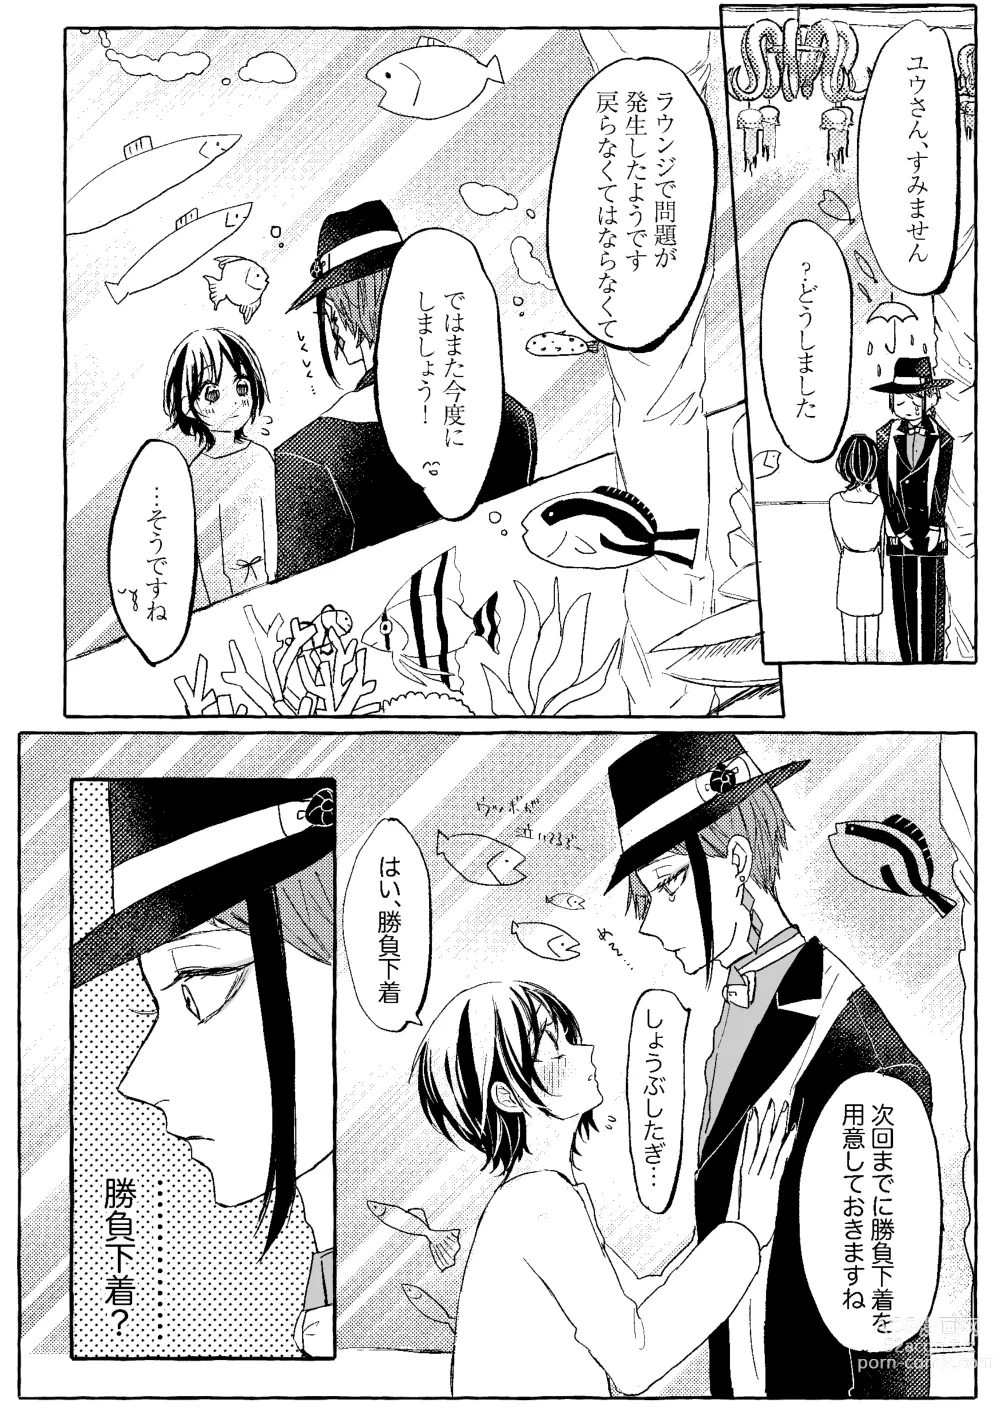 Page 15 of doujinshi Teenage Dream